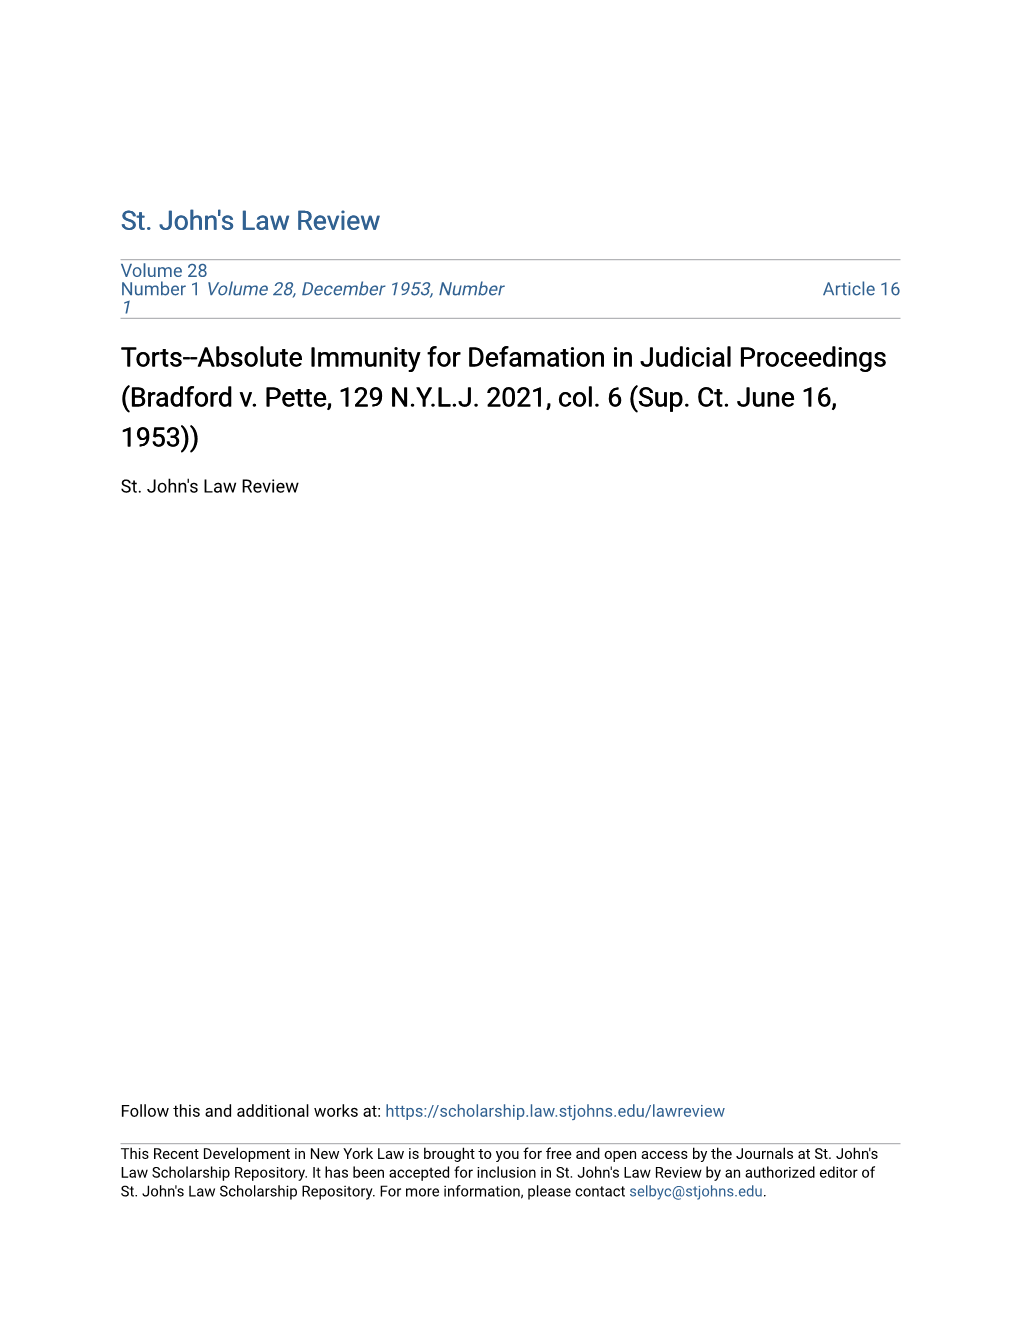 Torts--Absolute Immunity for Defamation in Judicial Proceedings (Bradford V